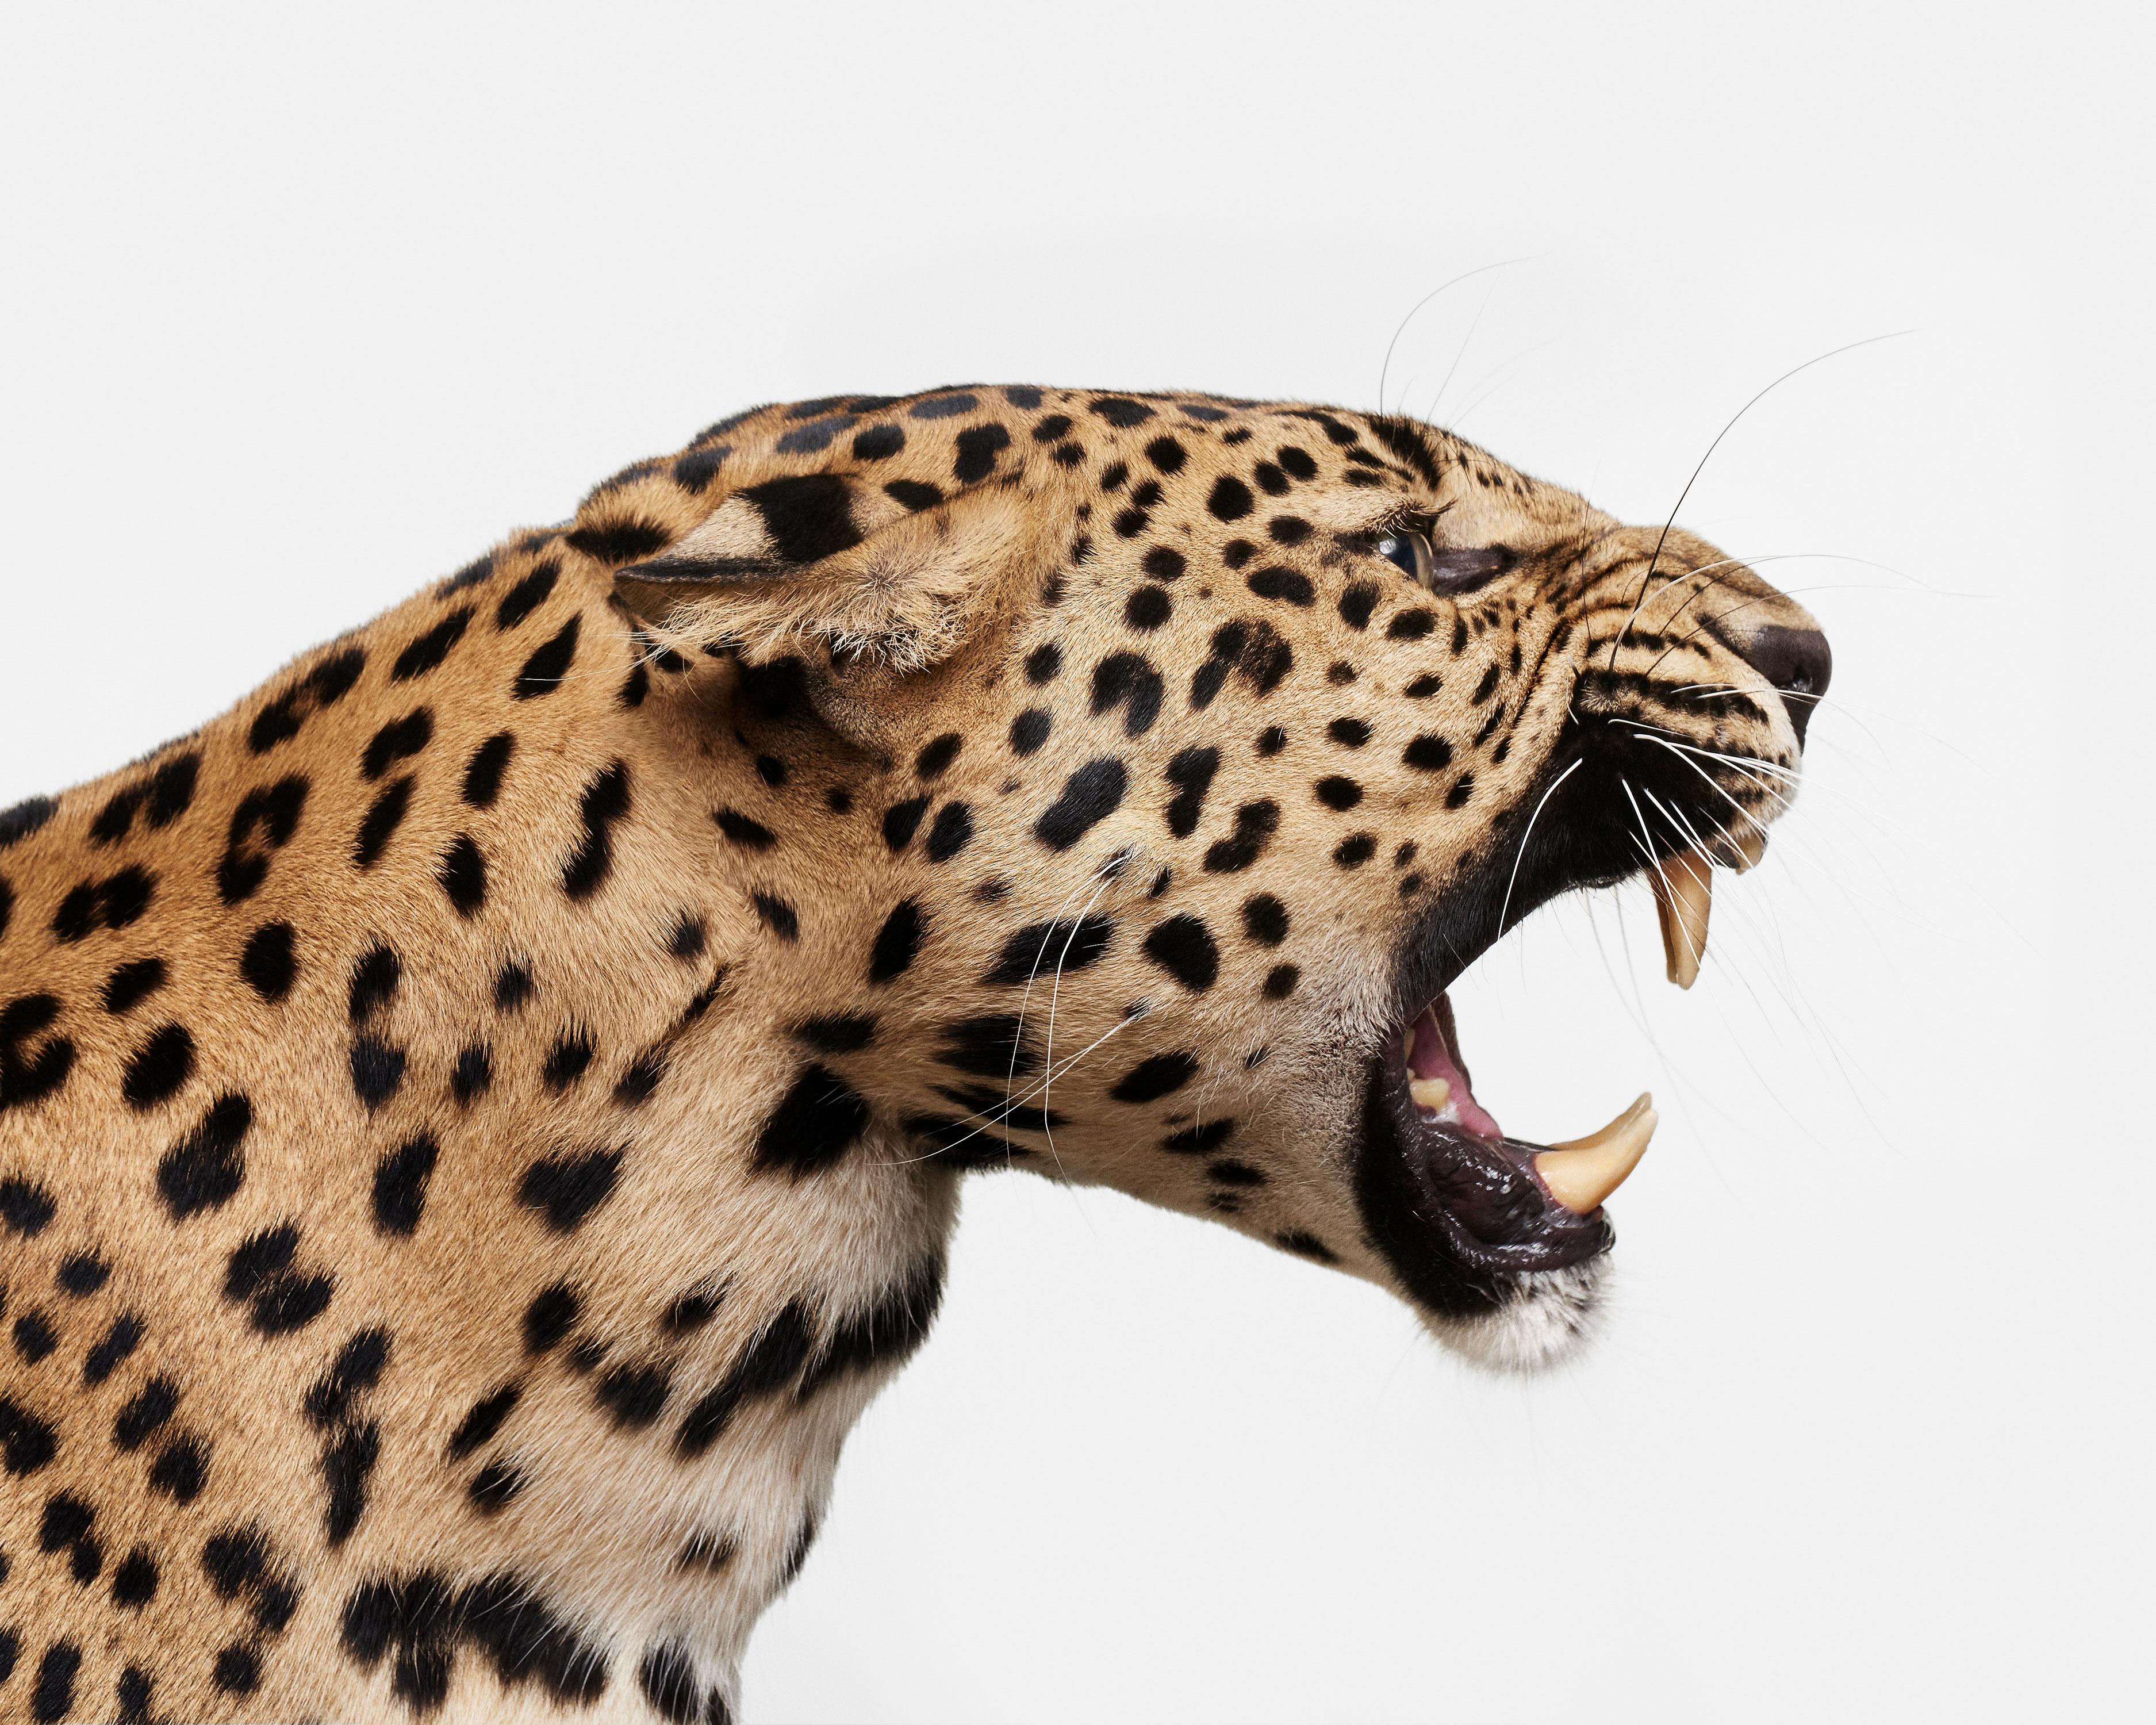 Randal Ford – gepunkteter Leopardenschnarl, Fotografie 2018